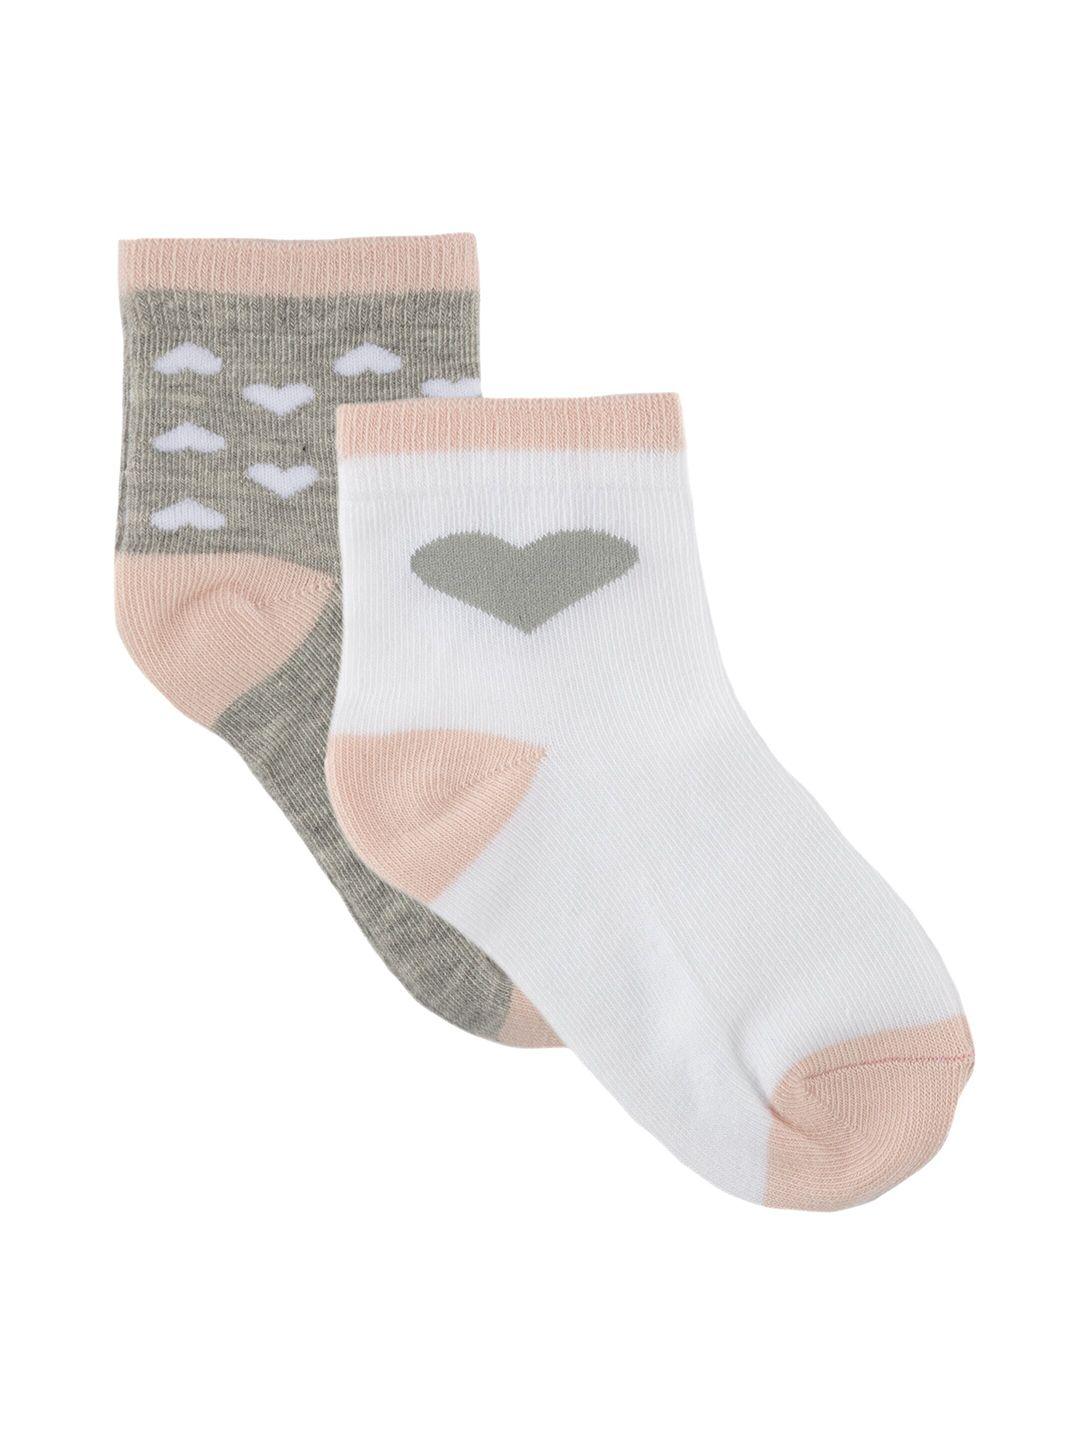 nuluv-girls-pack-of-2-assorted-ankle-length-socks